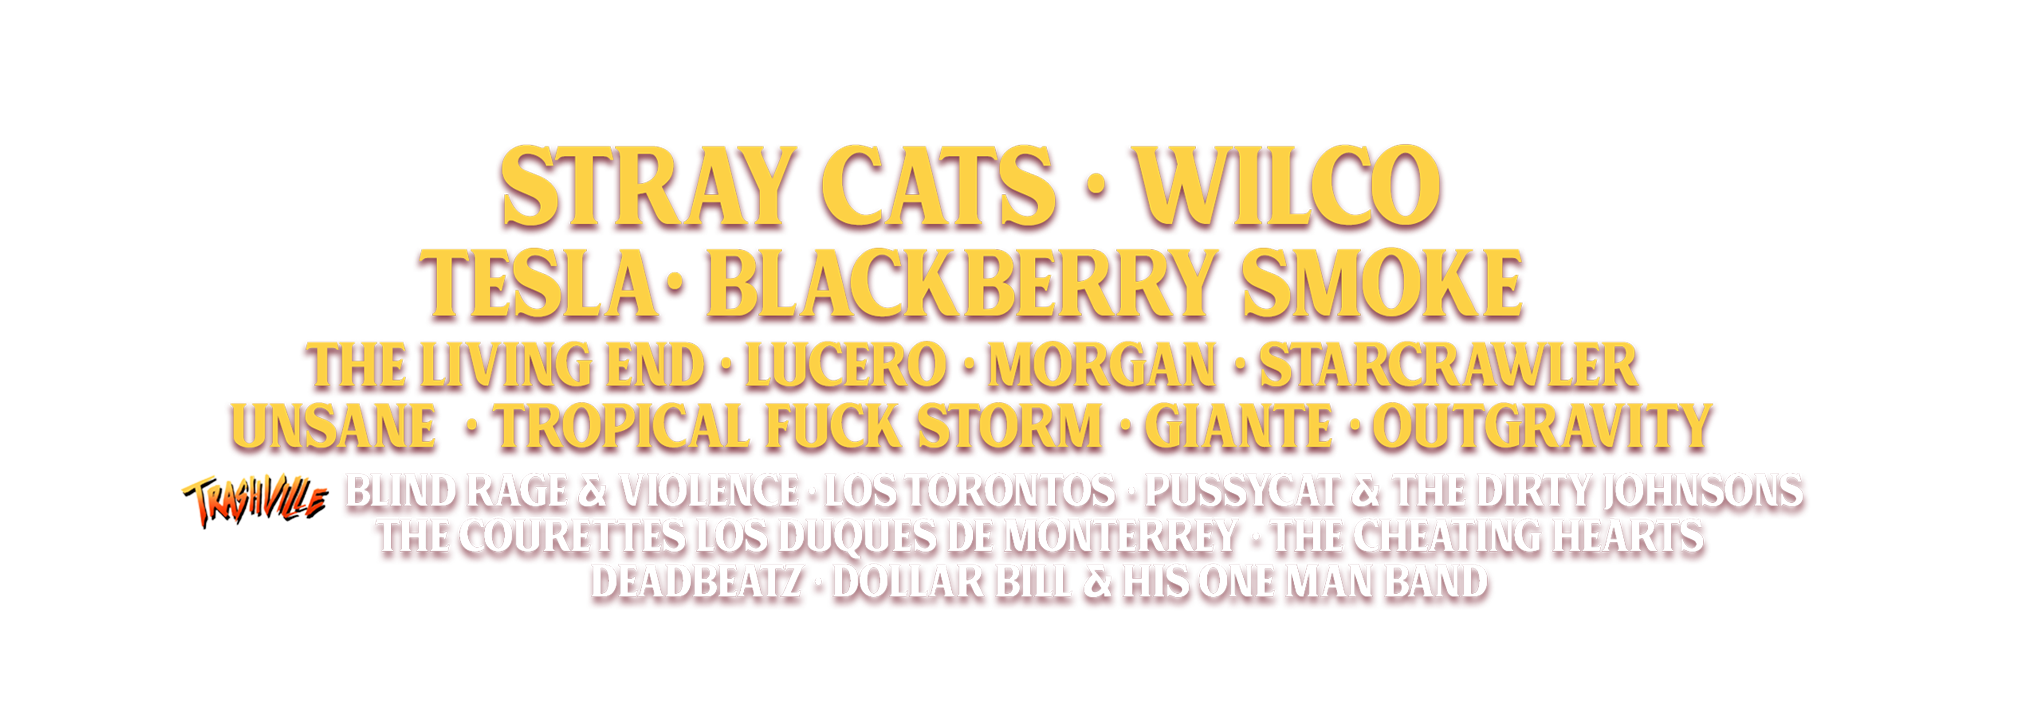 Azkena Rock Festival 2019. Tropical Fuck Storm, Tesla, Unsane, Blackberry Smoke, Stray Cats, Starcrawler... - Página 20 Cartel_ARF_2019_desktop